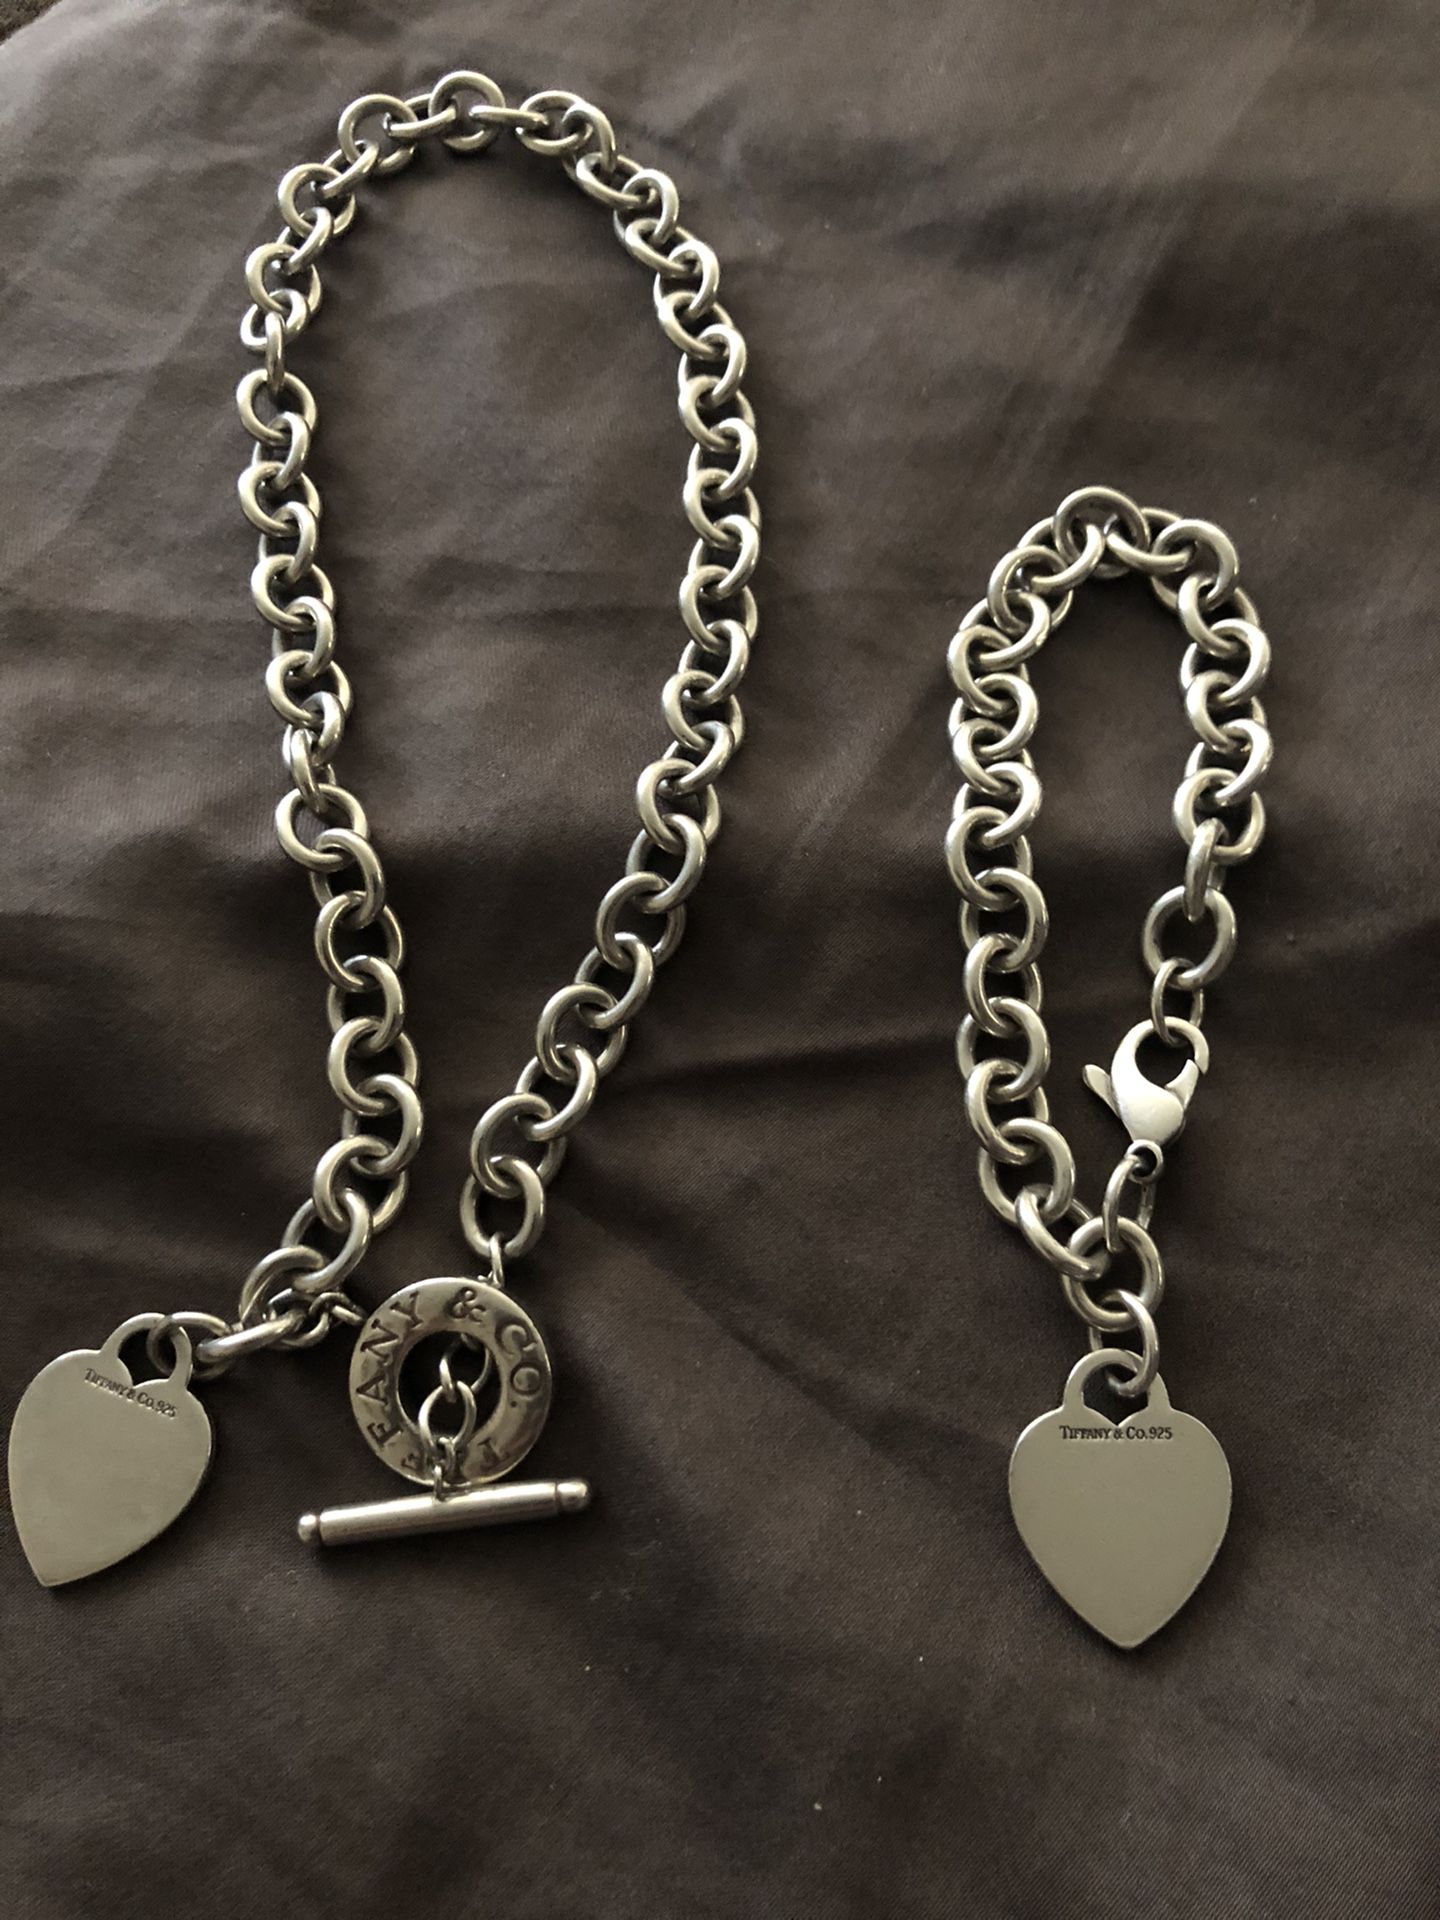 Tiffany & Co. choker necklace and matching bracelet